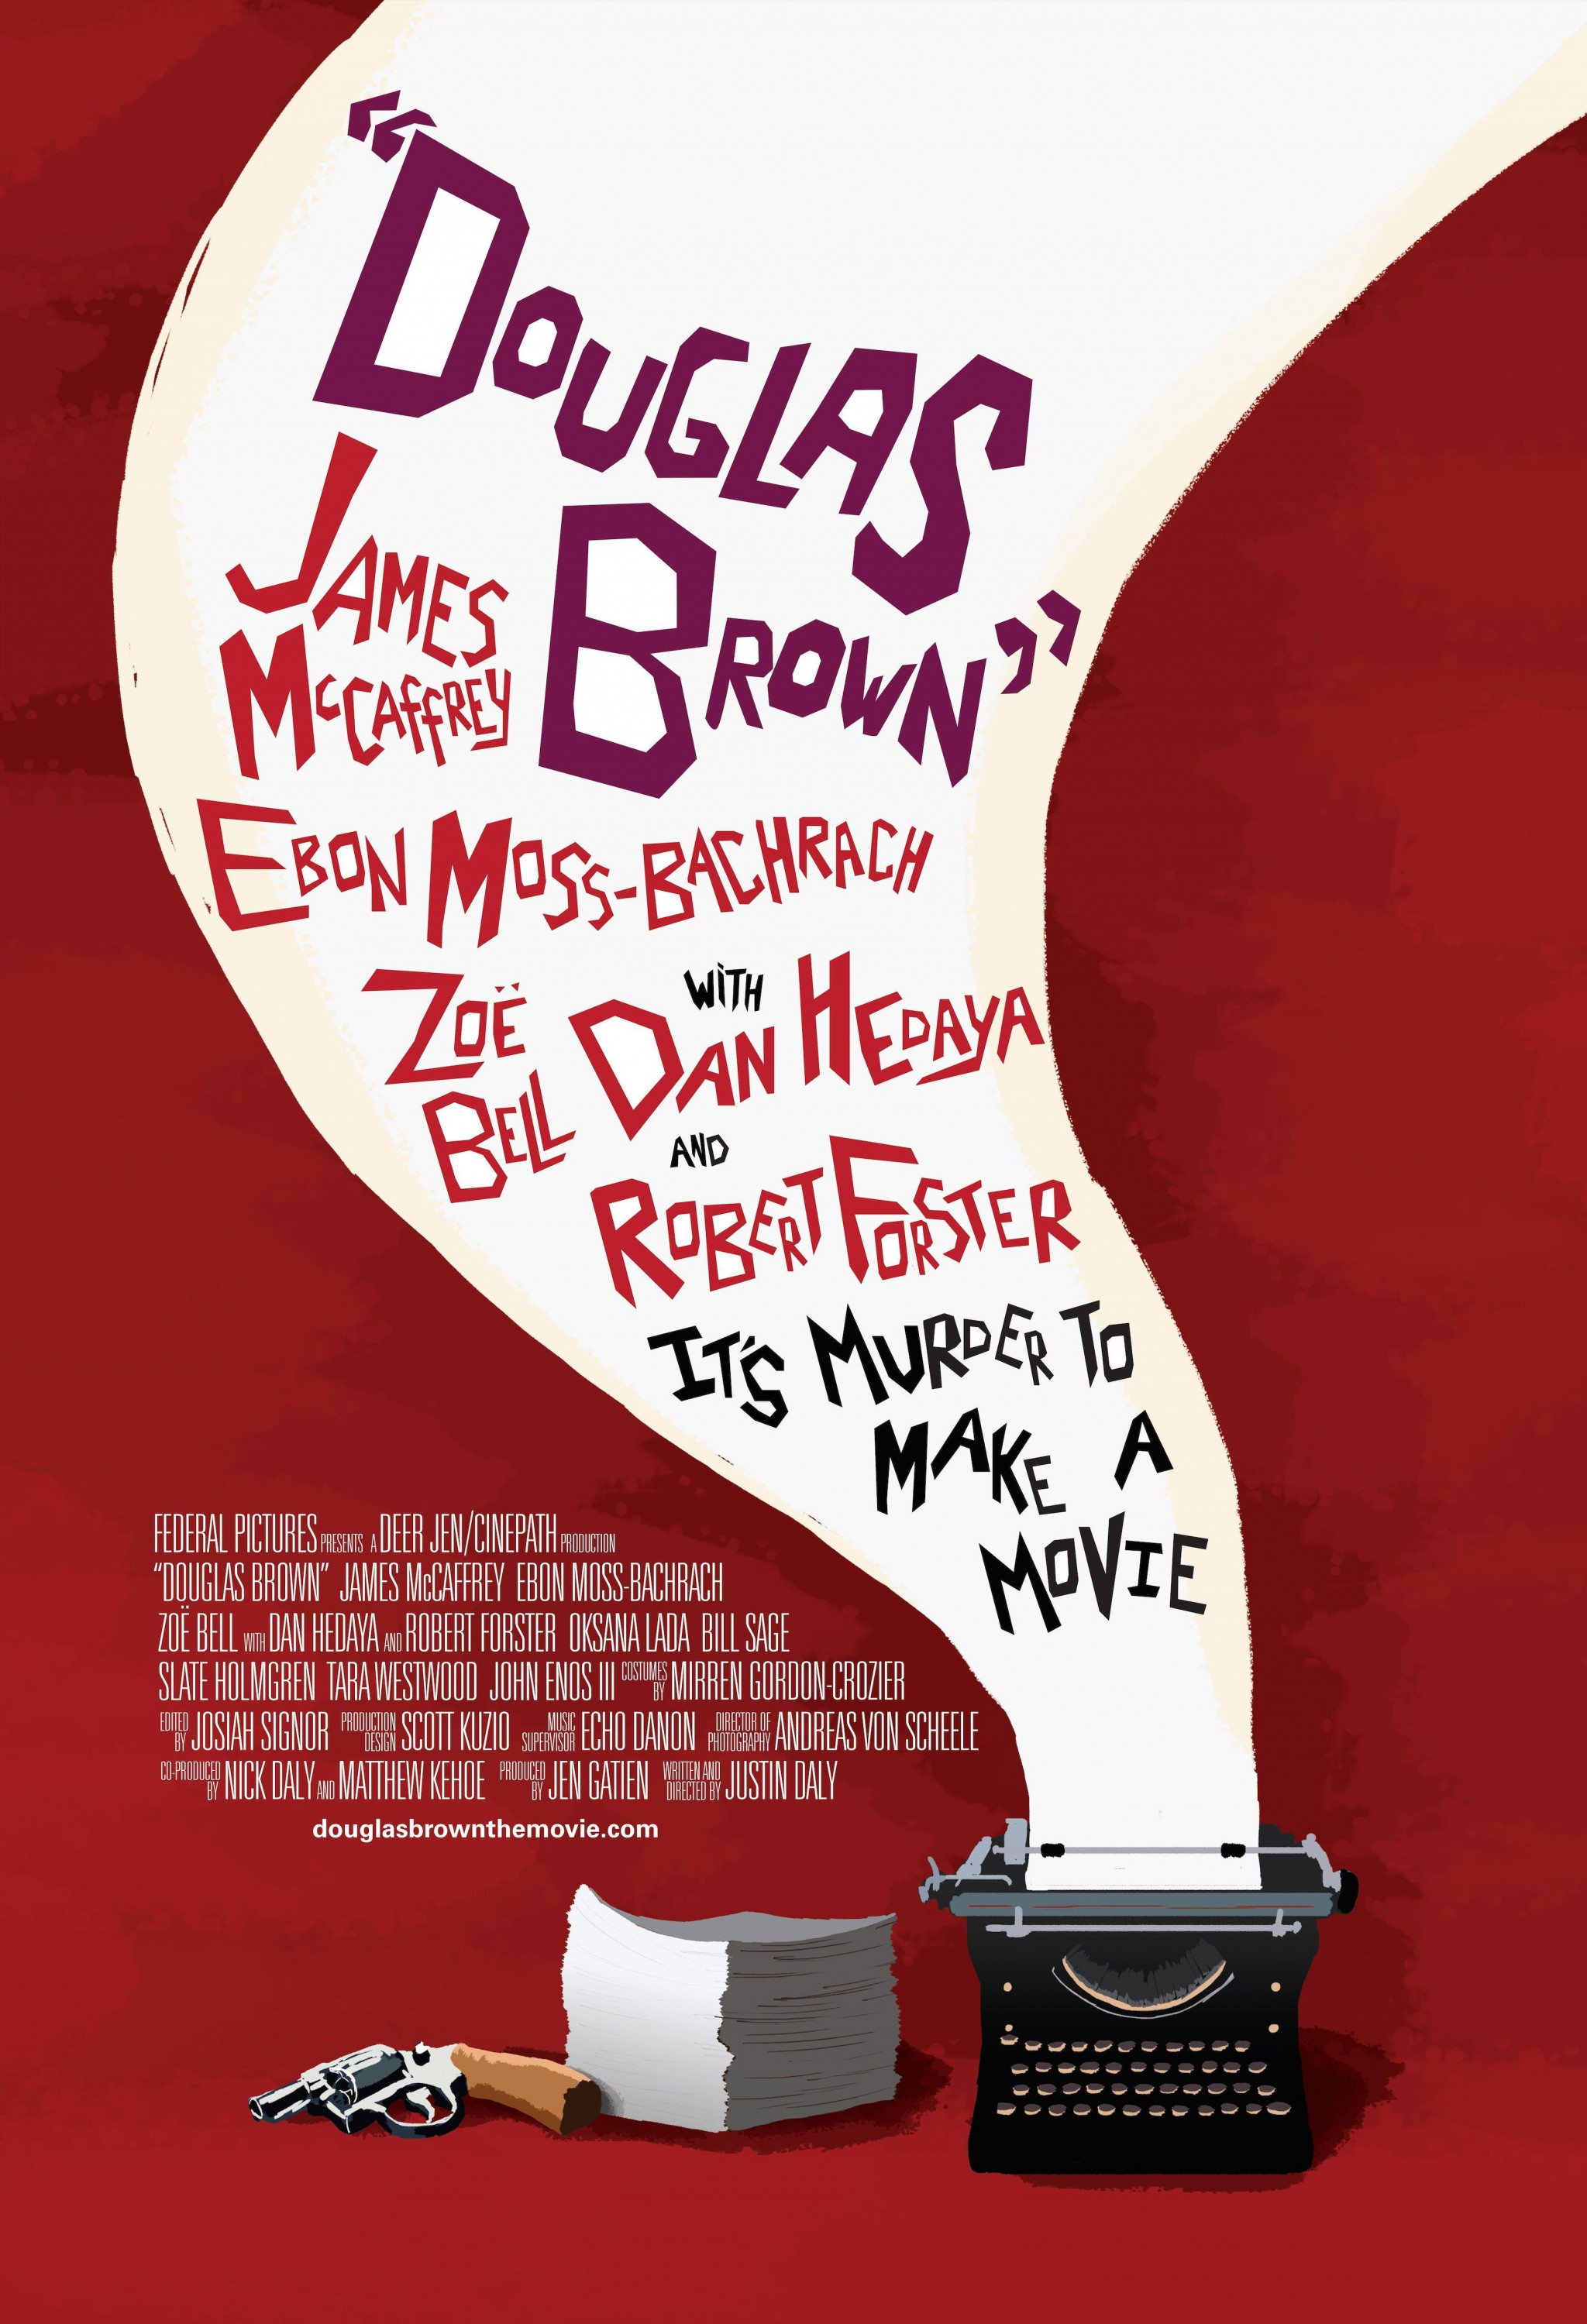 Mega Sized Movie Poster Image for Douglas Brown 